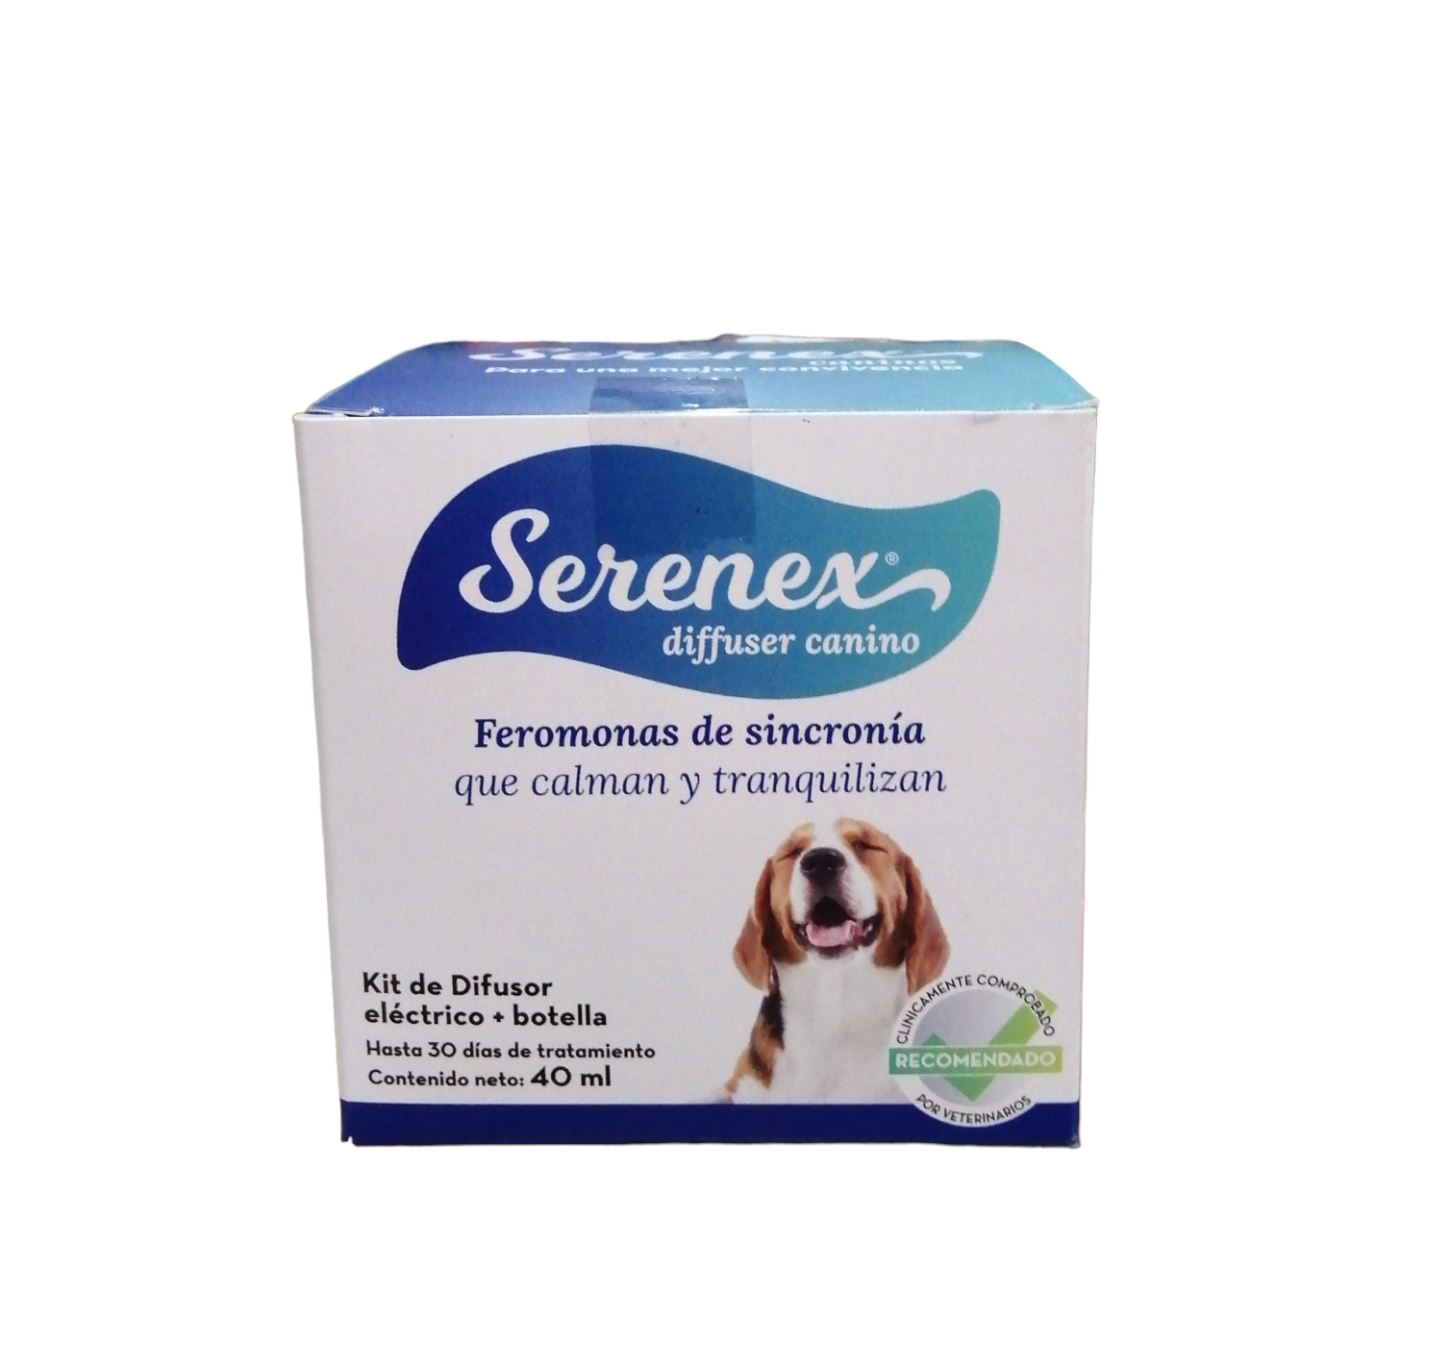 Serenex difusor canino